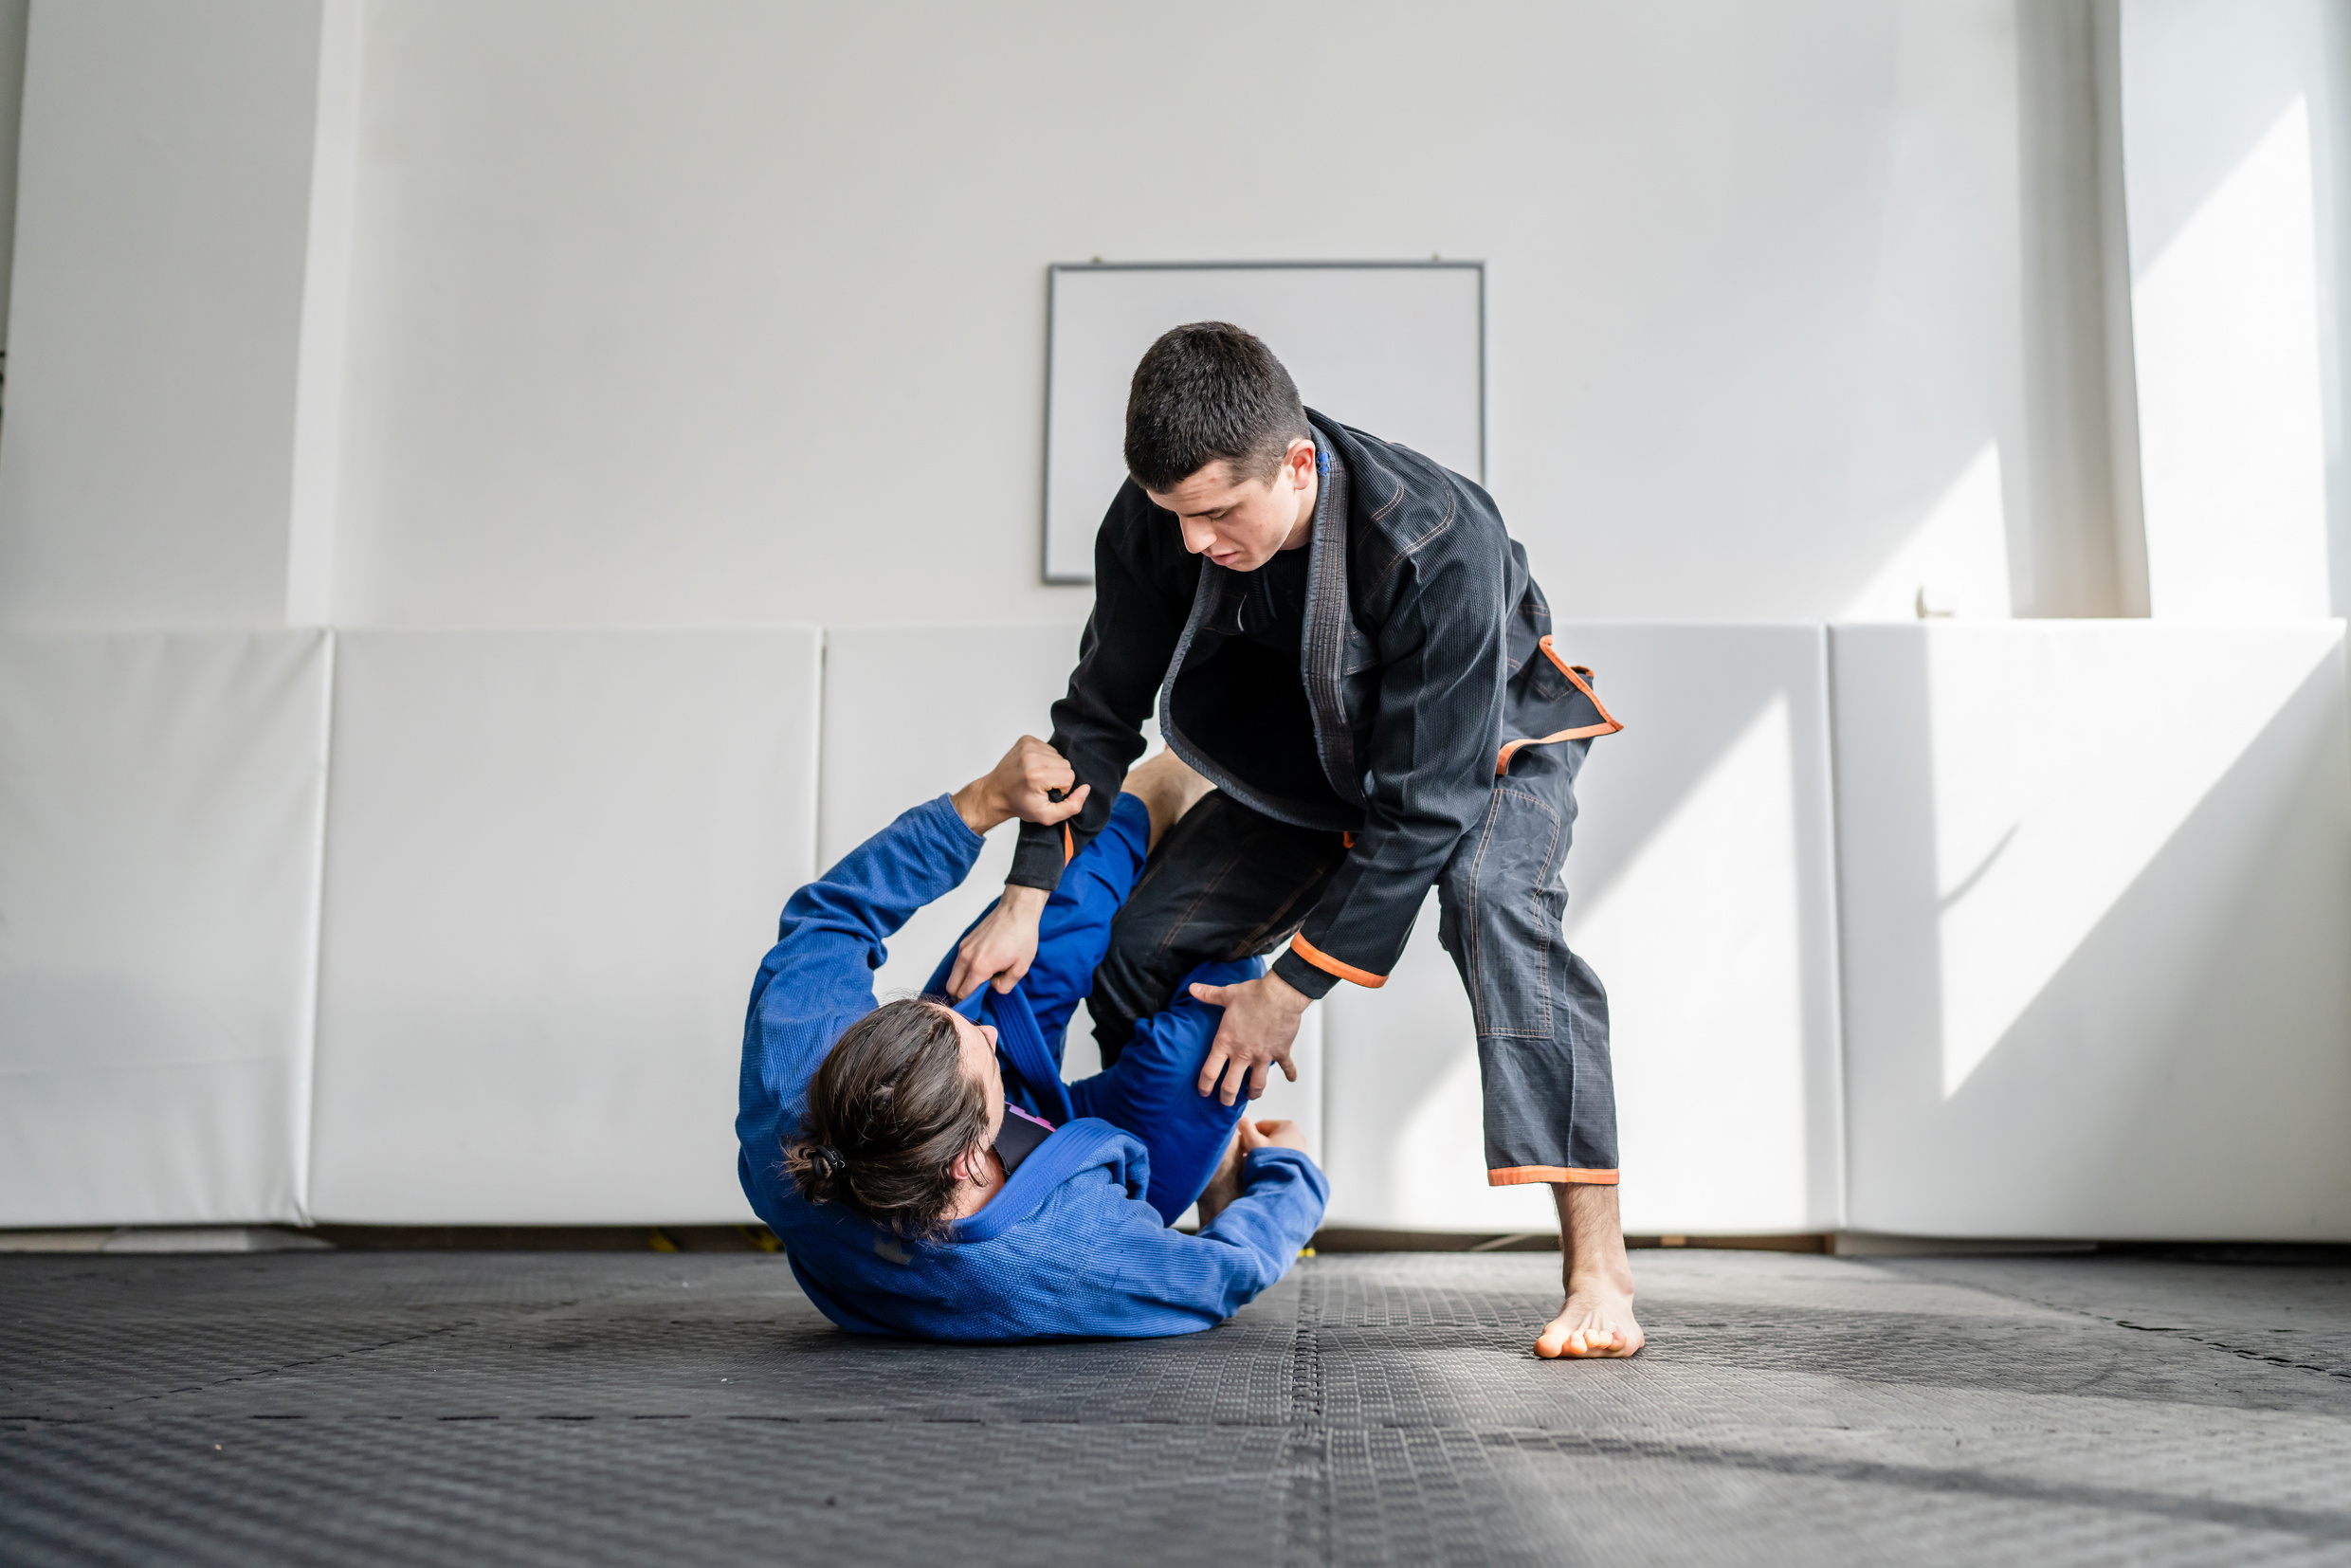 Two brazilian jiu jitsu BJJ athletes training at the academy martial arts ground fighting sparring wear kimono gi sport uniform on the tatami mats sports jiujitsu and self-defense concept copy space